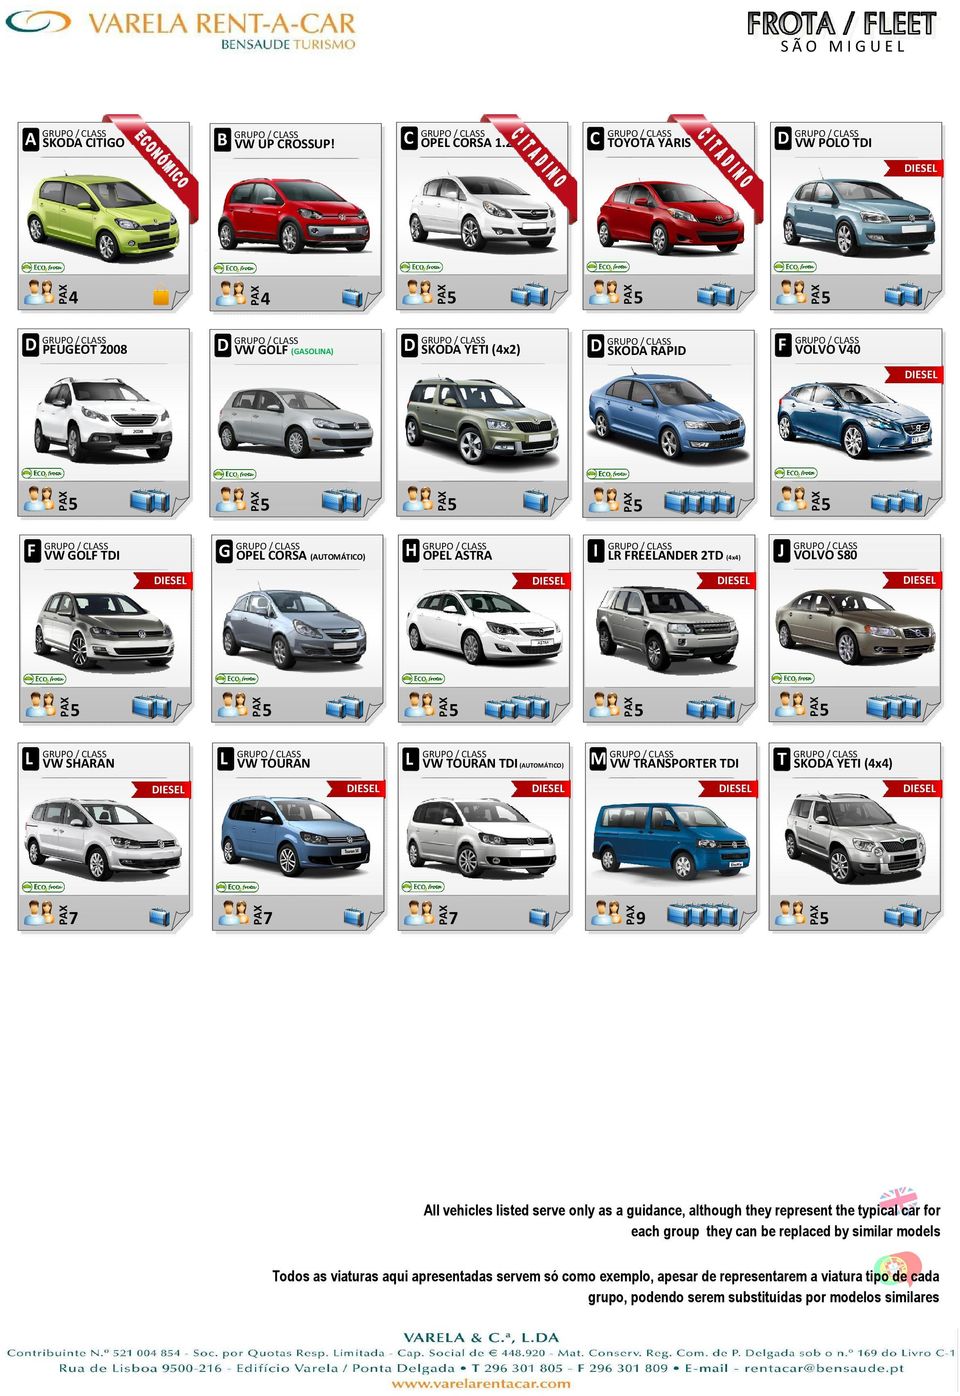 VW TOURAN J T SKODA YETI (4x4) VW SHARAN R REEANDER 2TD (4x4) I H GRUPO OPE ASTRA 9 G GRUPO OPE ORSA (AUTOMÁTIO) VW GO TDI All vehicles listed serve only as a